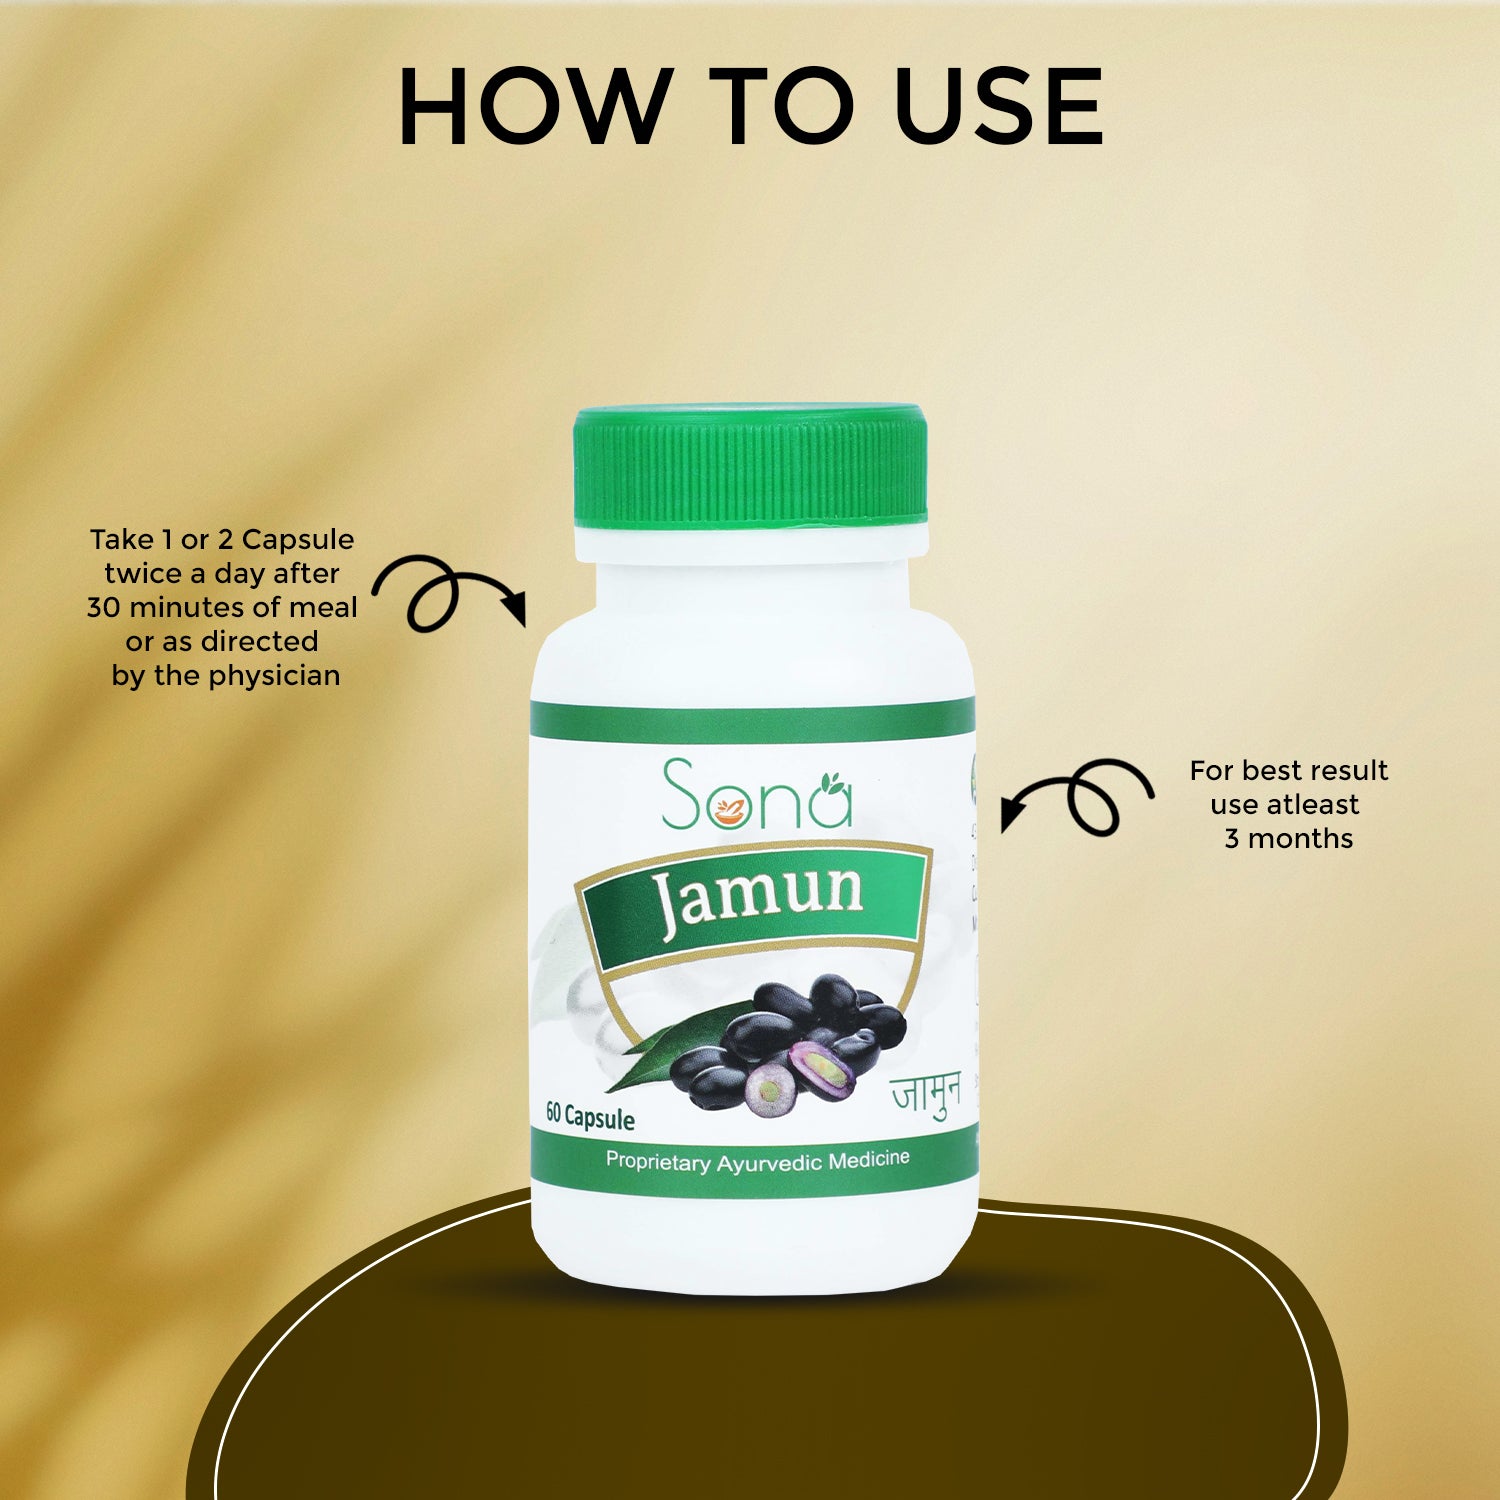 Sona Jamun seeds Capsules -60 Capsule (Pack of 1)